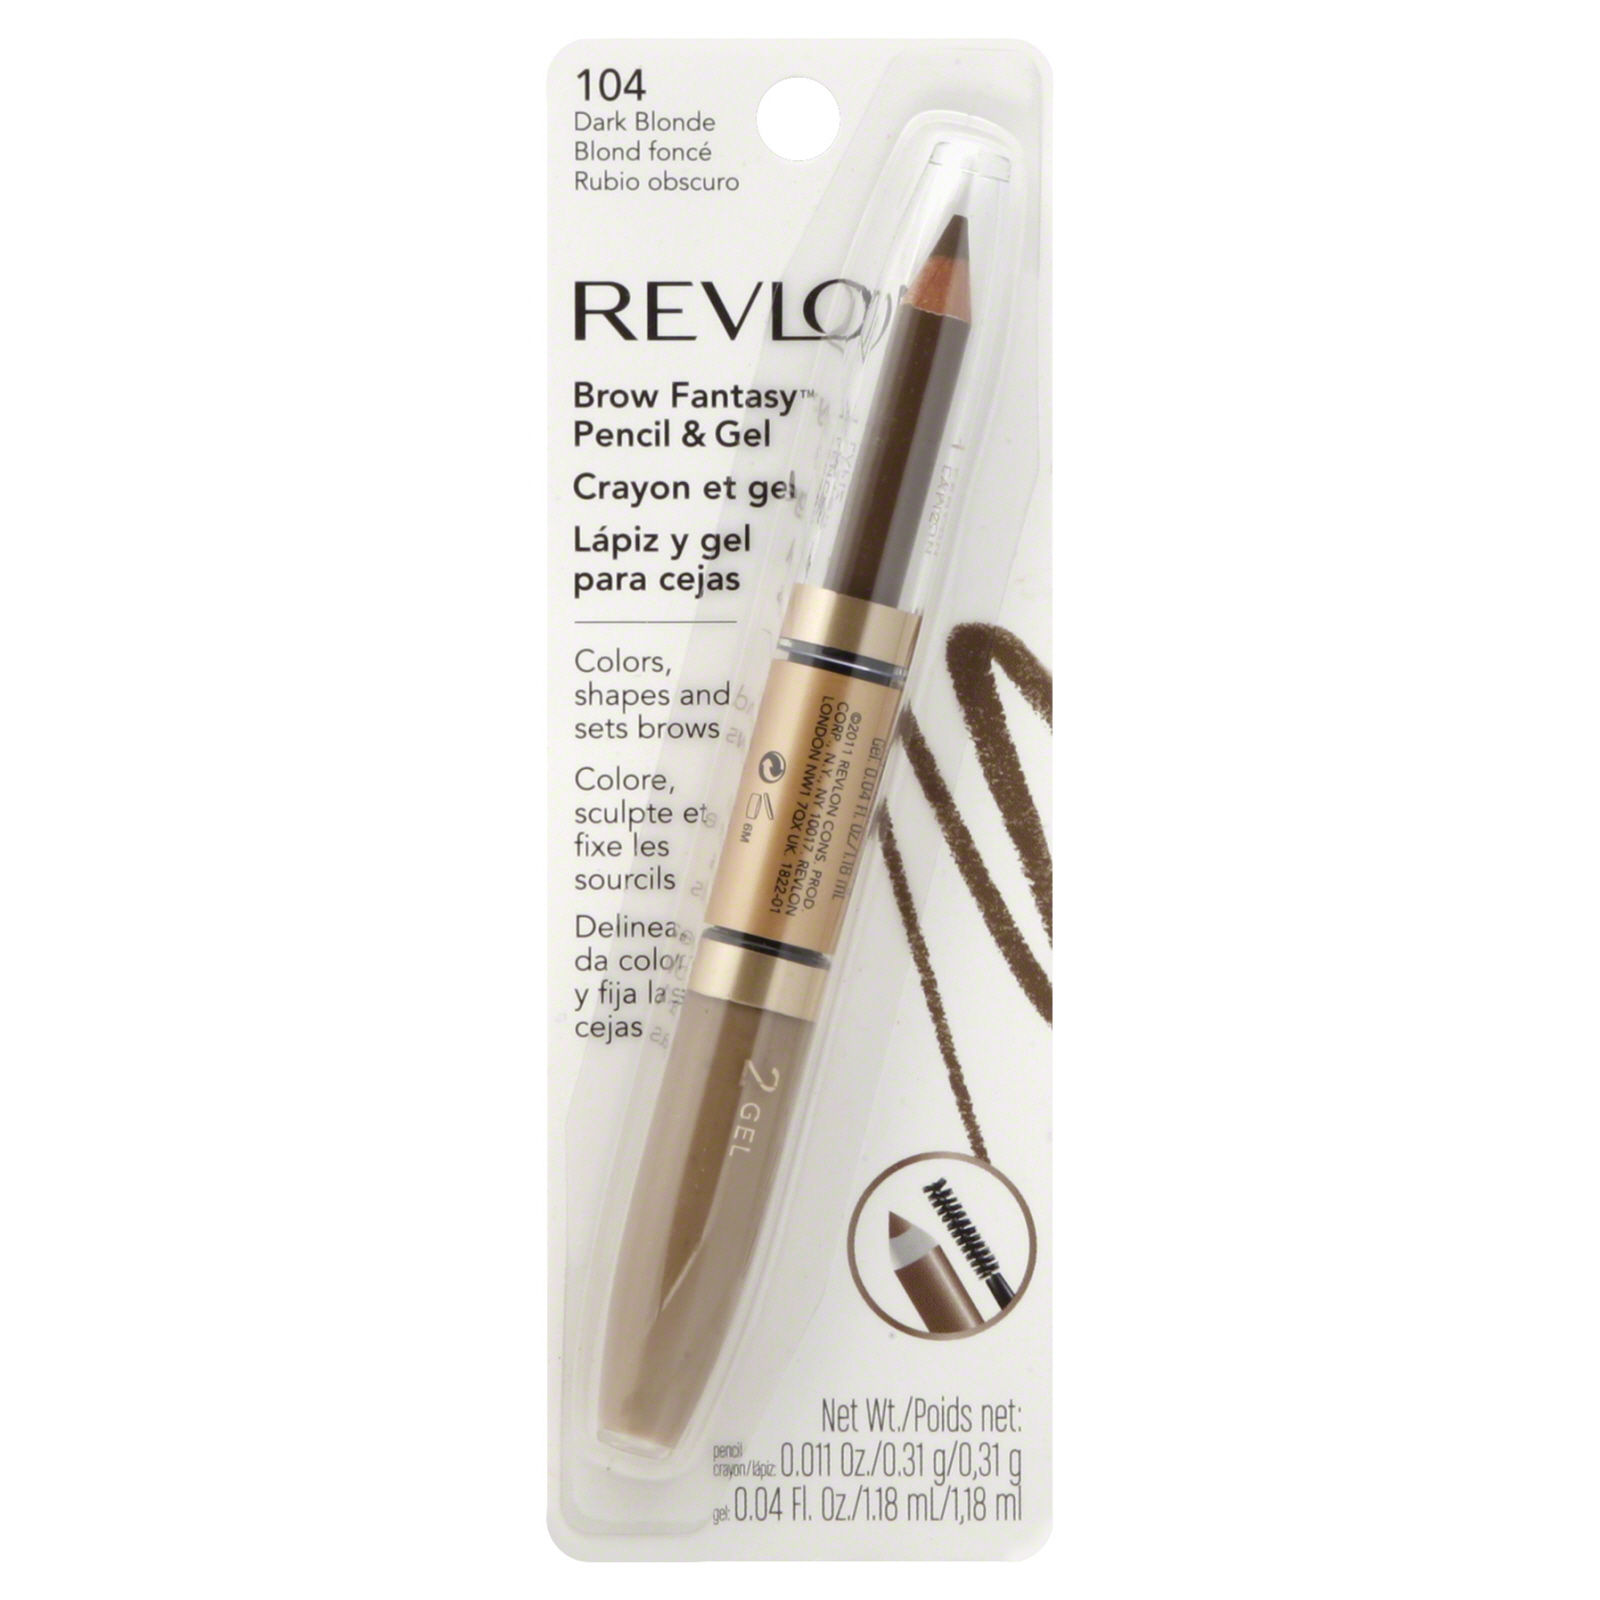 Revlon Brow Fantasy Pencil & Gel, Dark Blonde